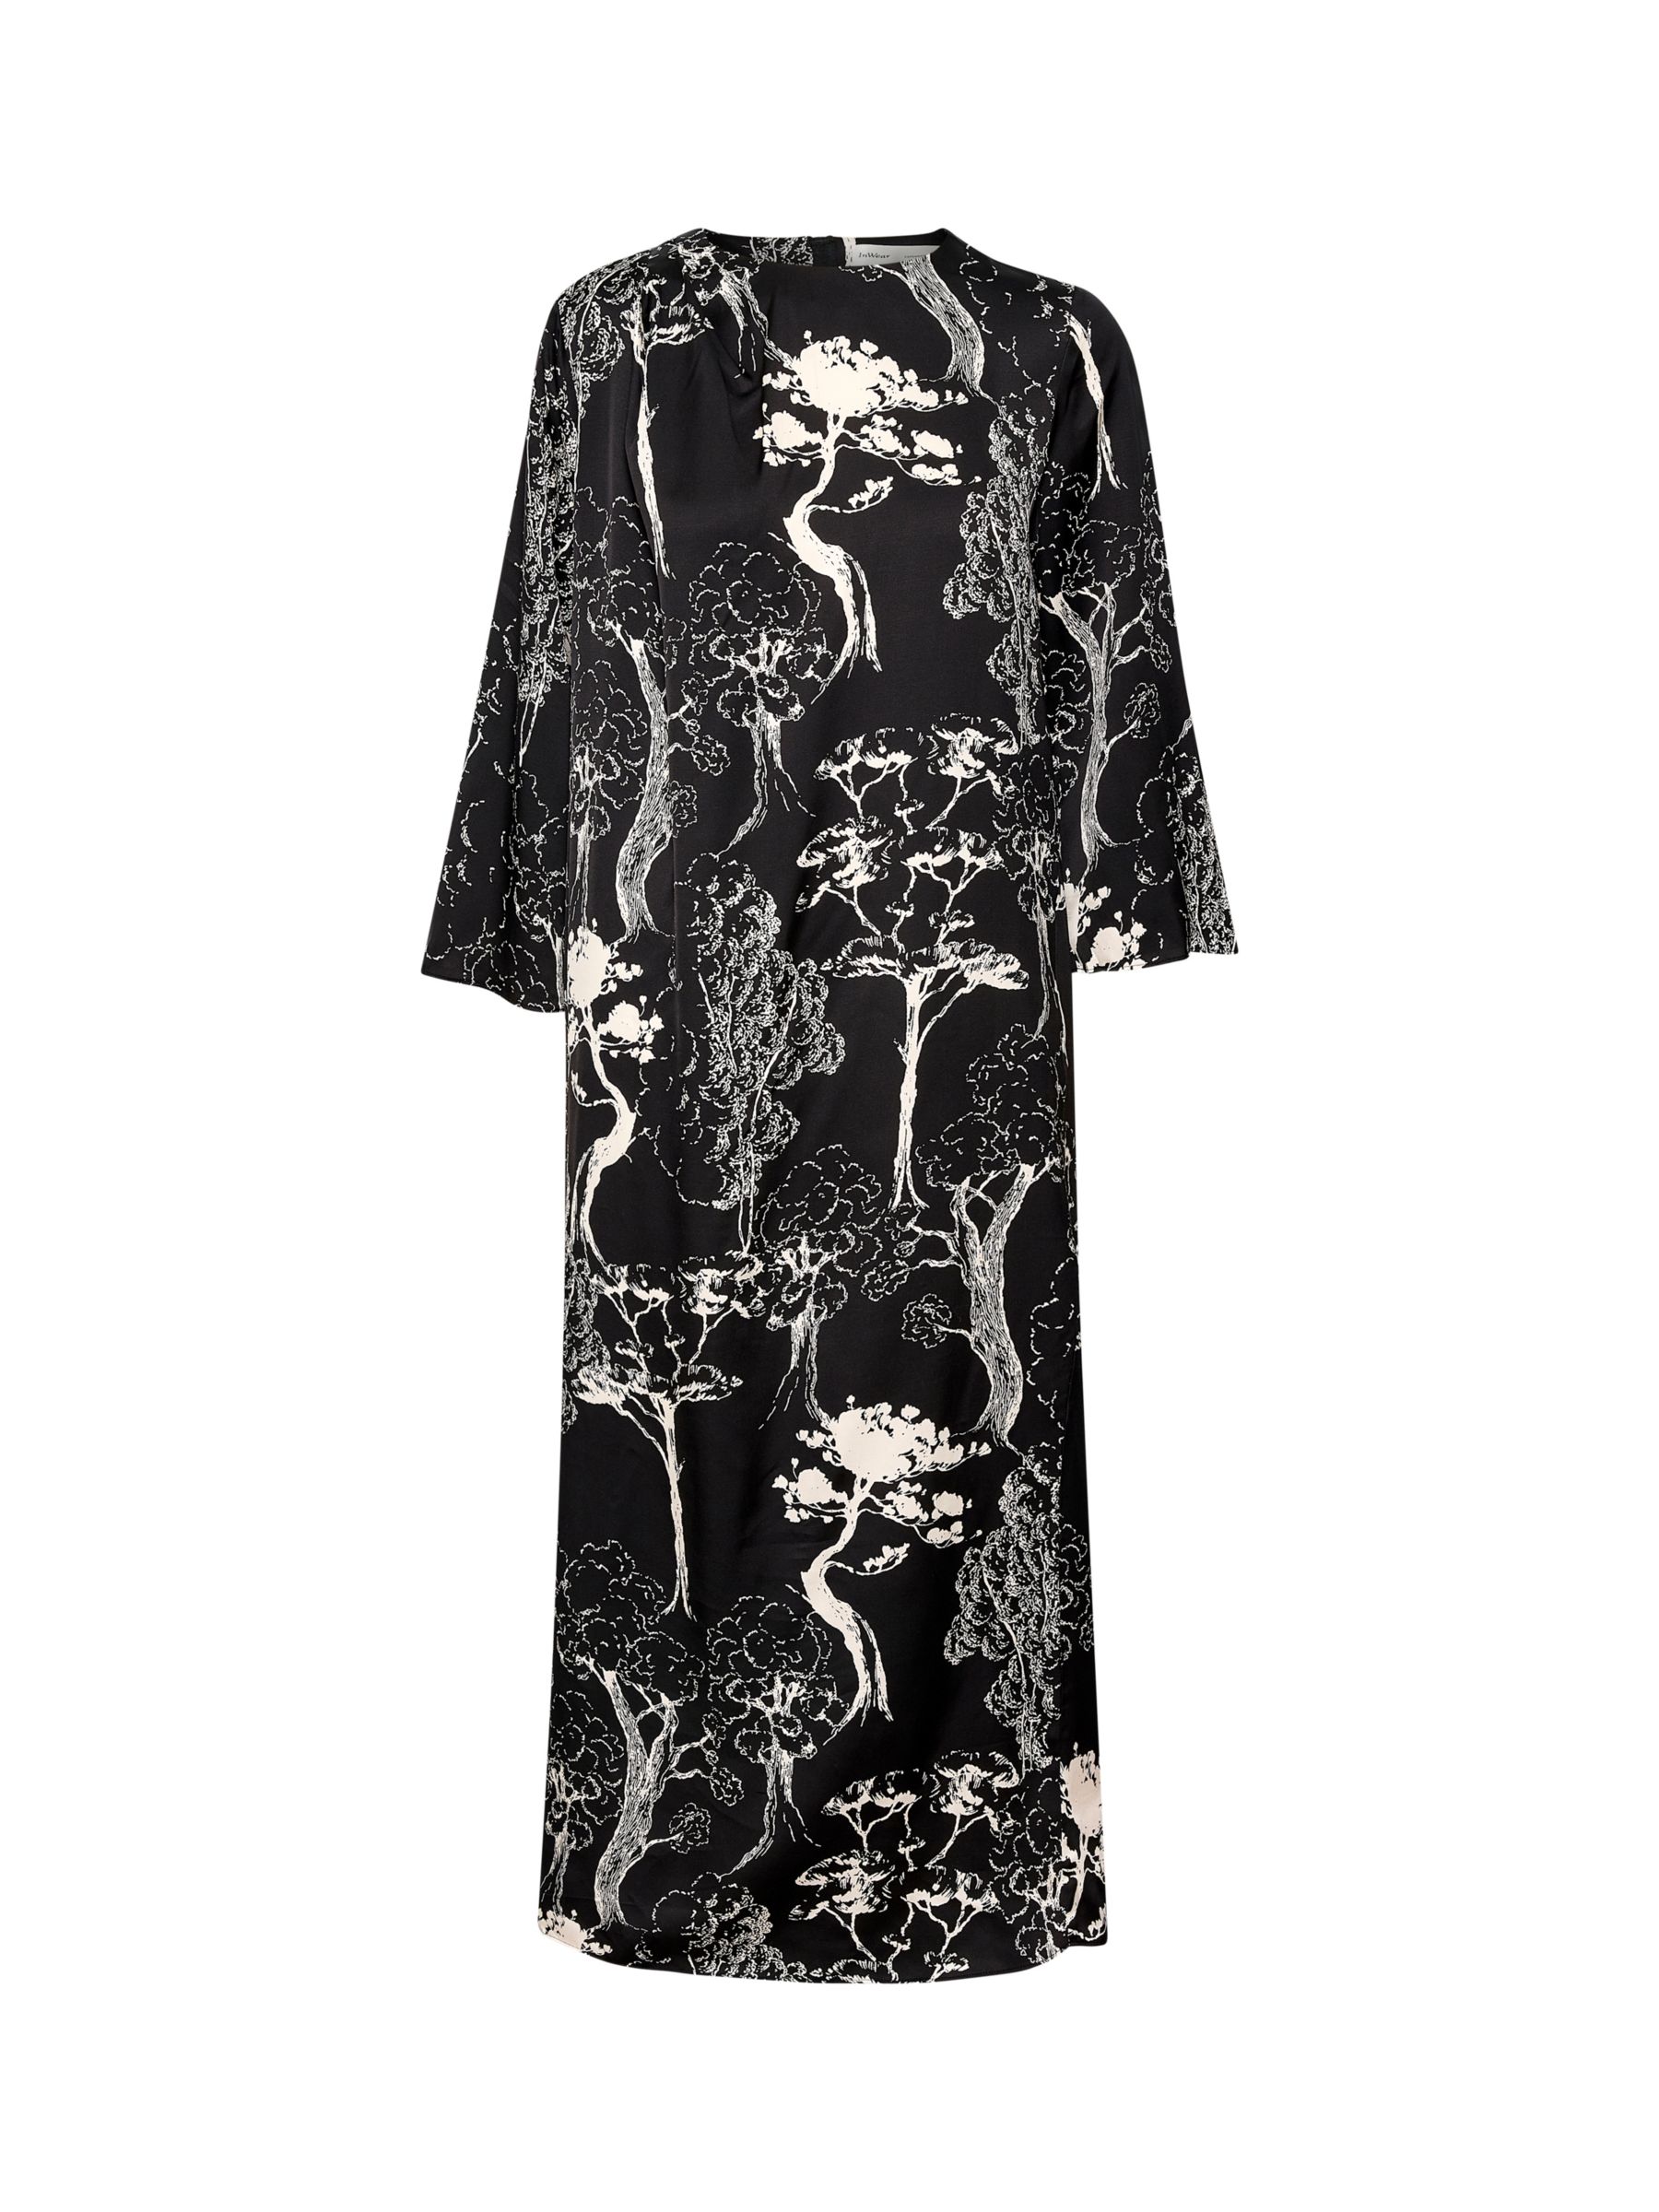 InWear Nelly Botanical Print Maxi Dress, Black/White, 10